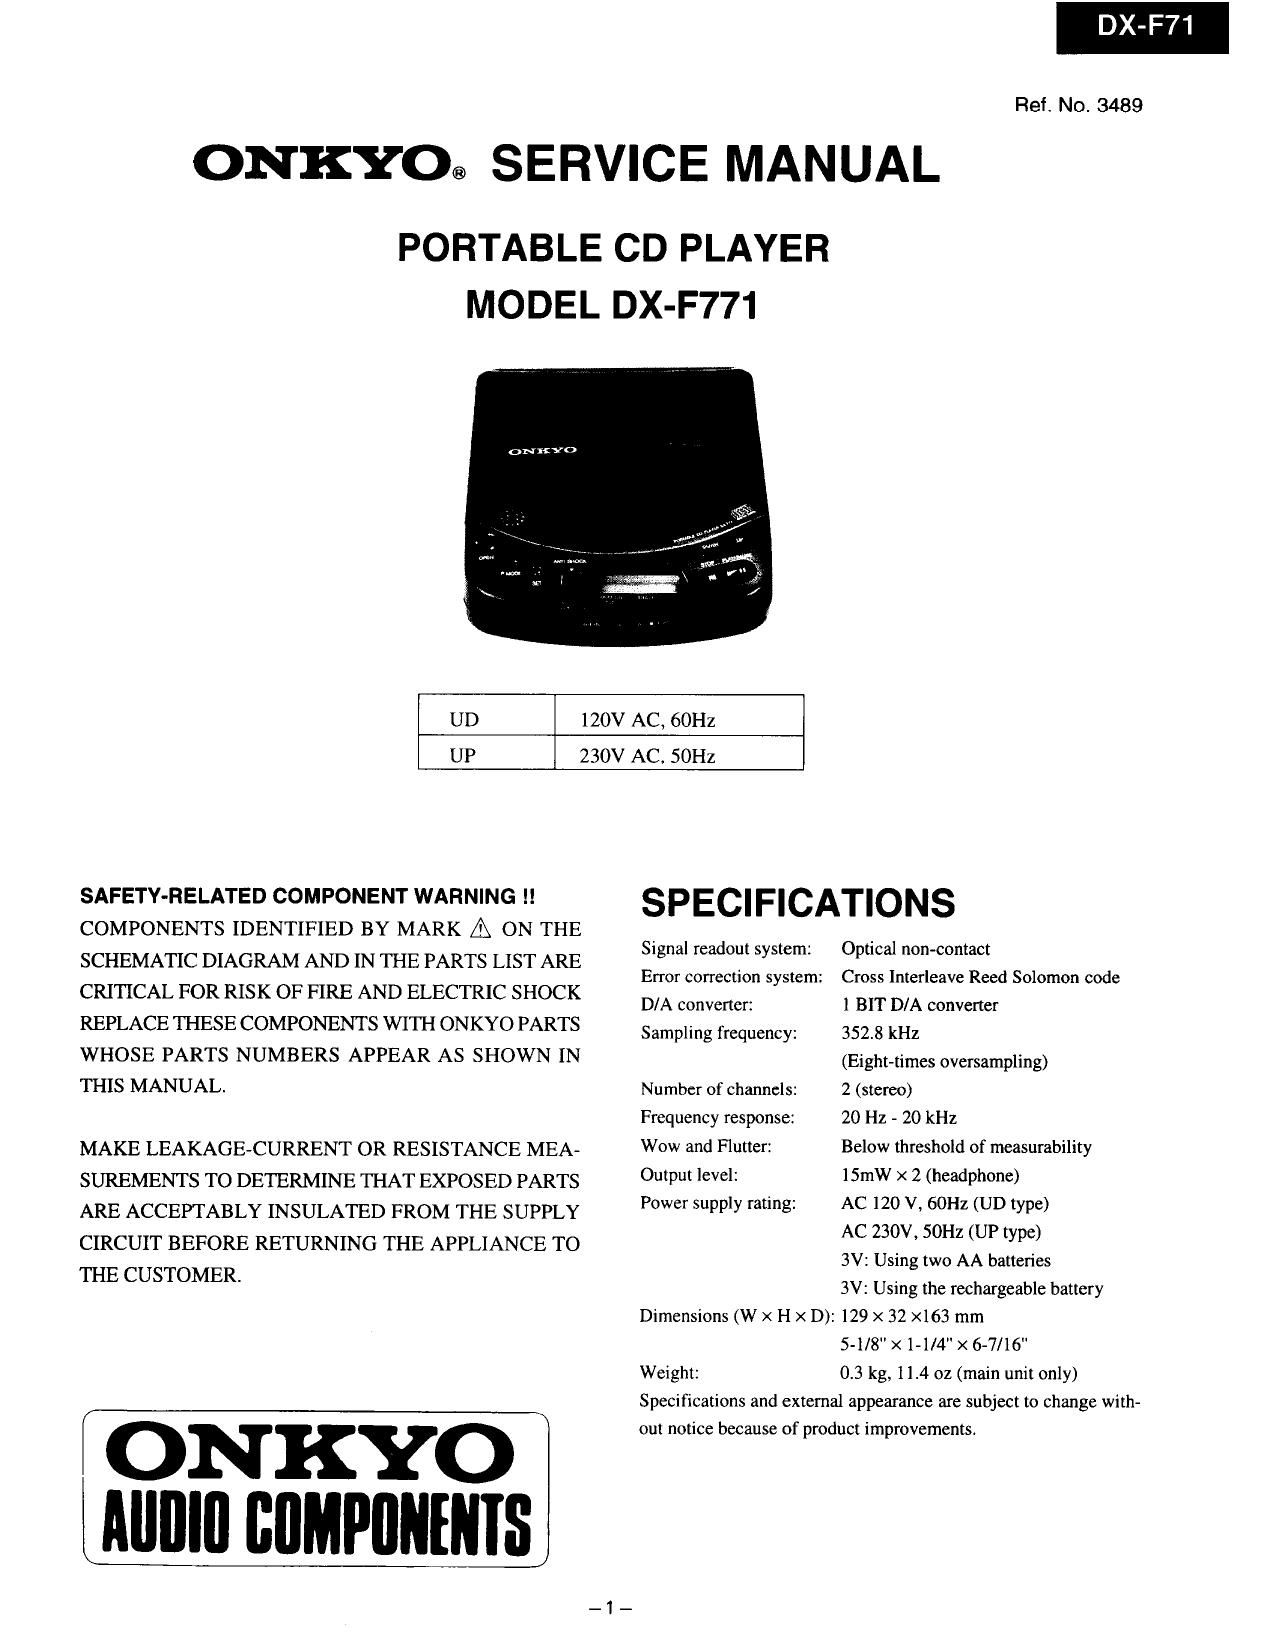 Onkyo DXF 771 Service Manual